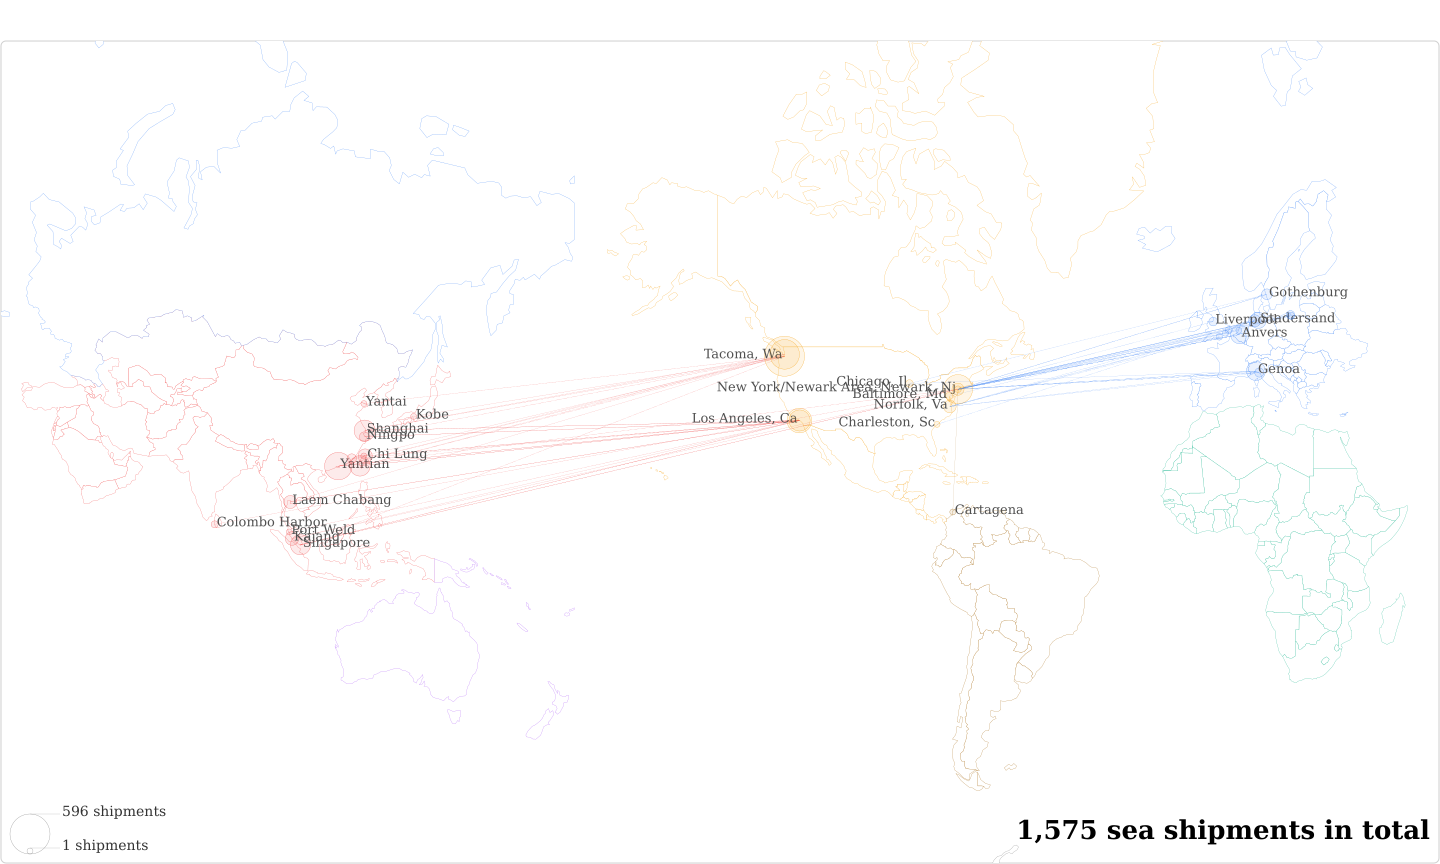 Plexus's Imports Per Country Map